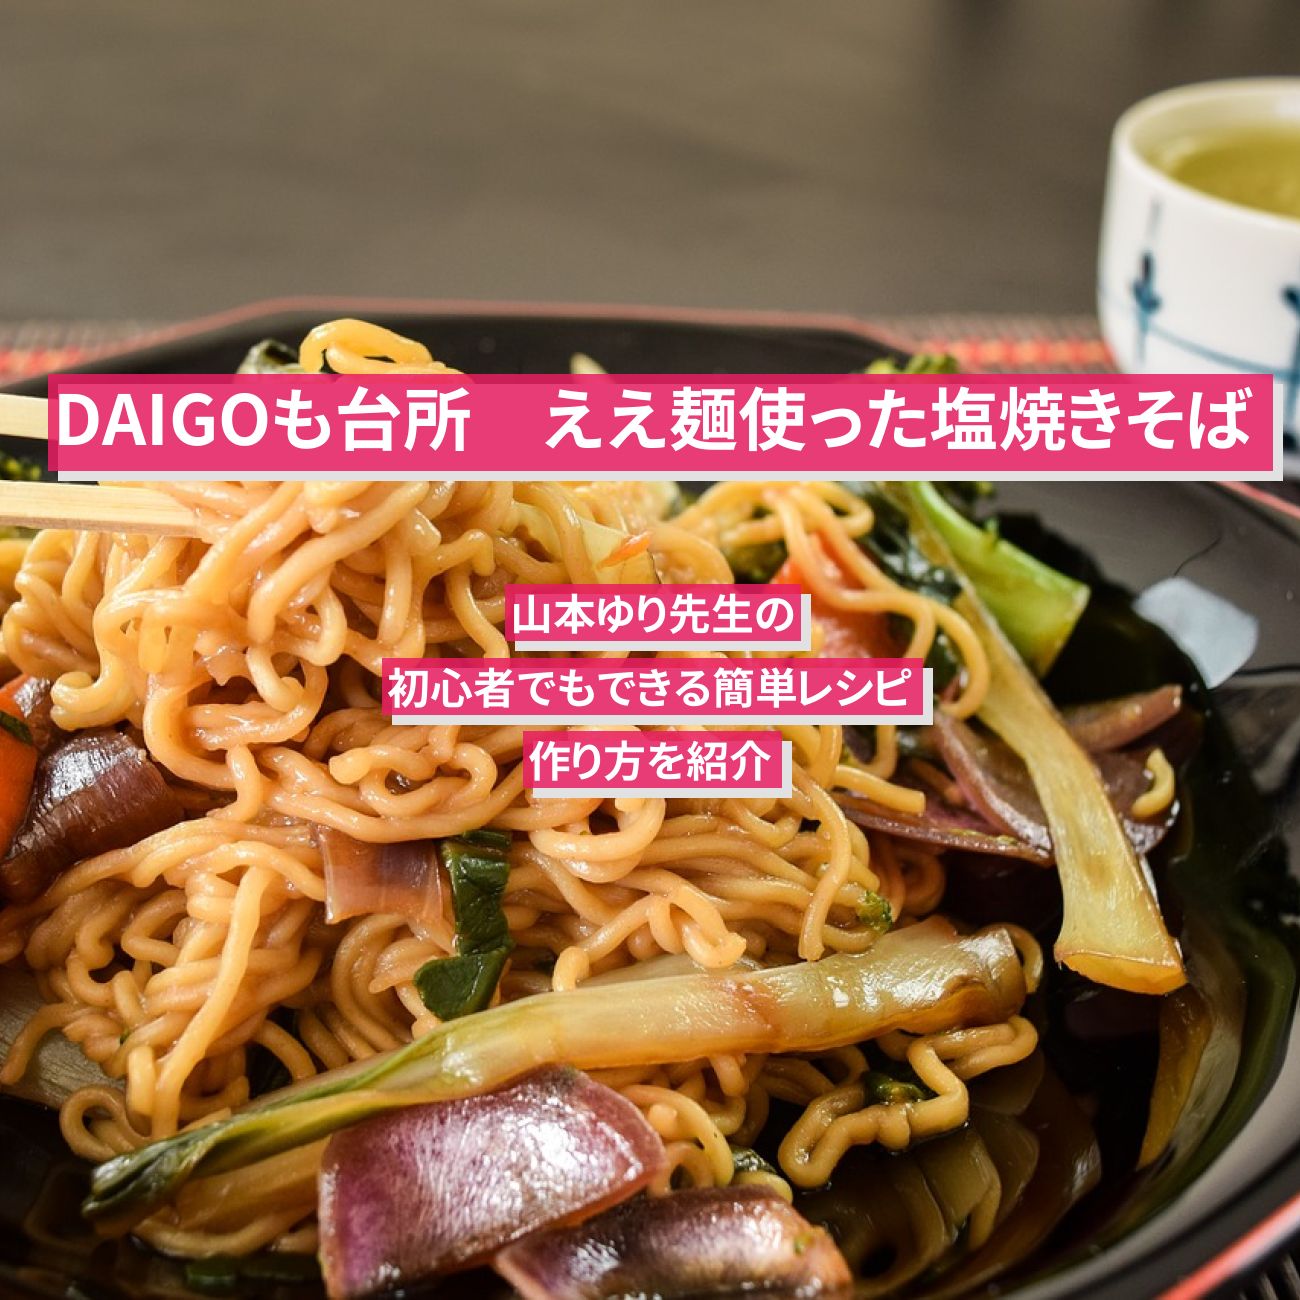 【DAIGOも台所】ええ麺使った『塩焼きそば』山本ゆり先生のレシピ・作り方を紹介〔ダイゴも台所〕